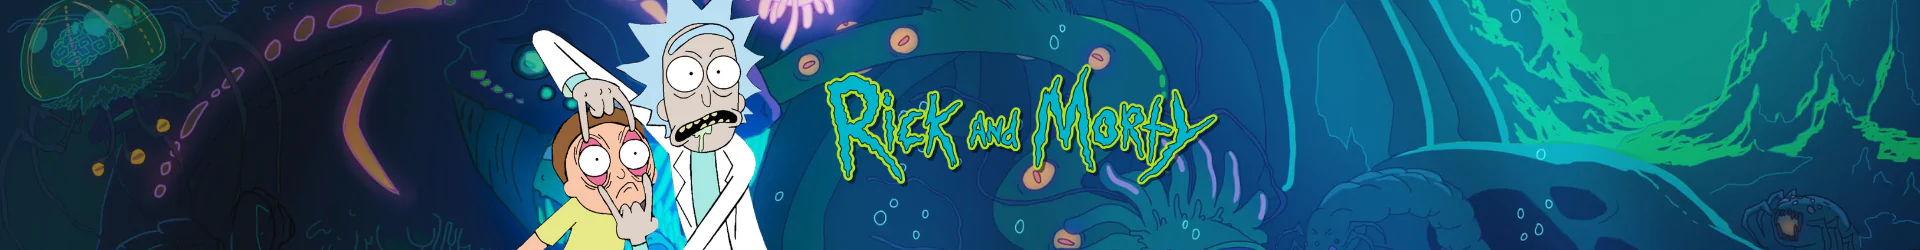 Rick and Morty gift sets banner